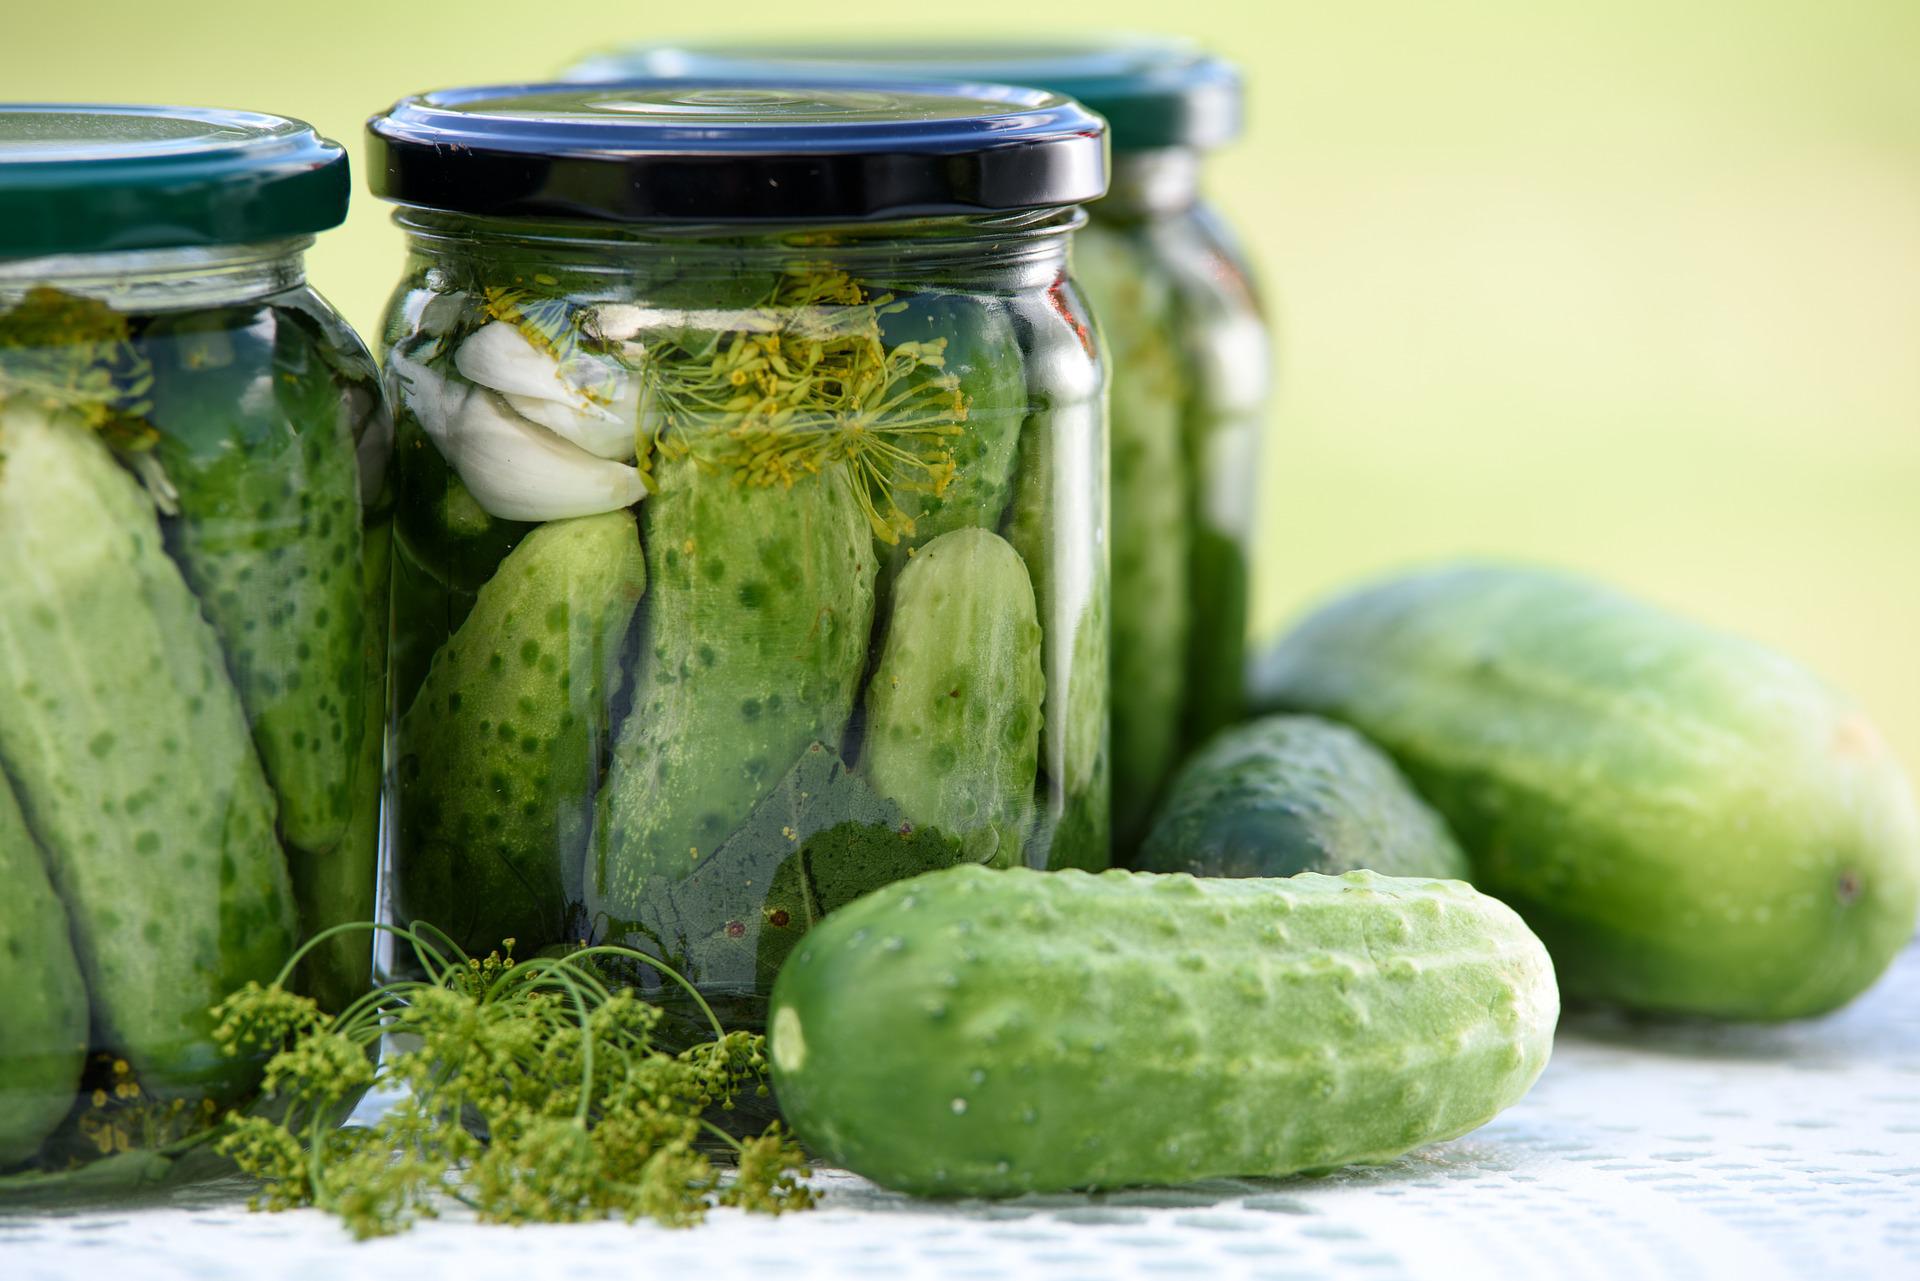 cucumbers from garden in jar